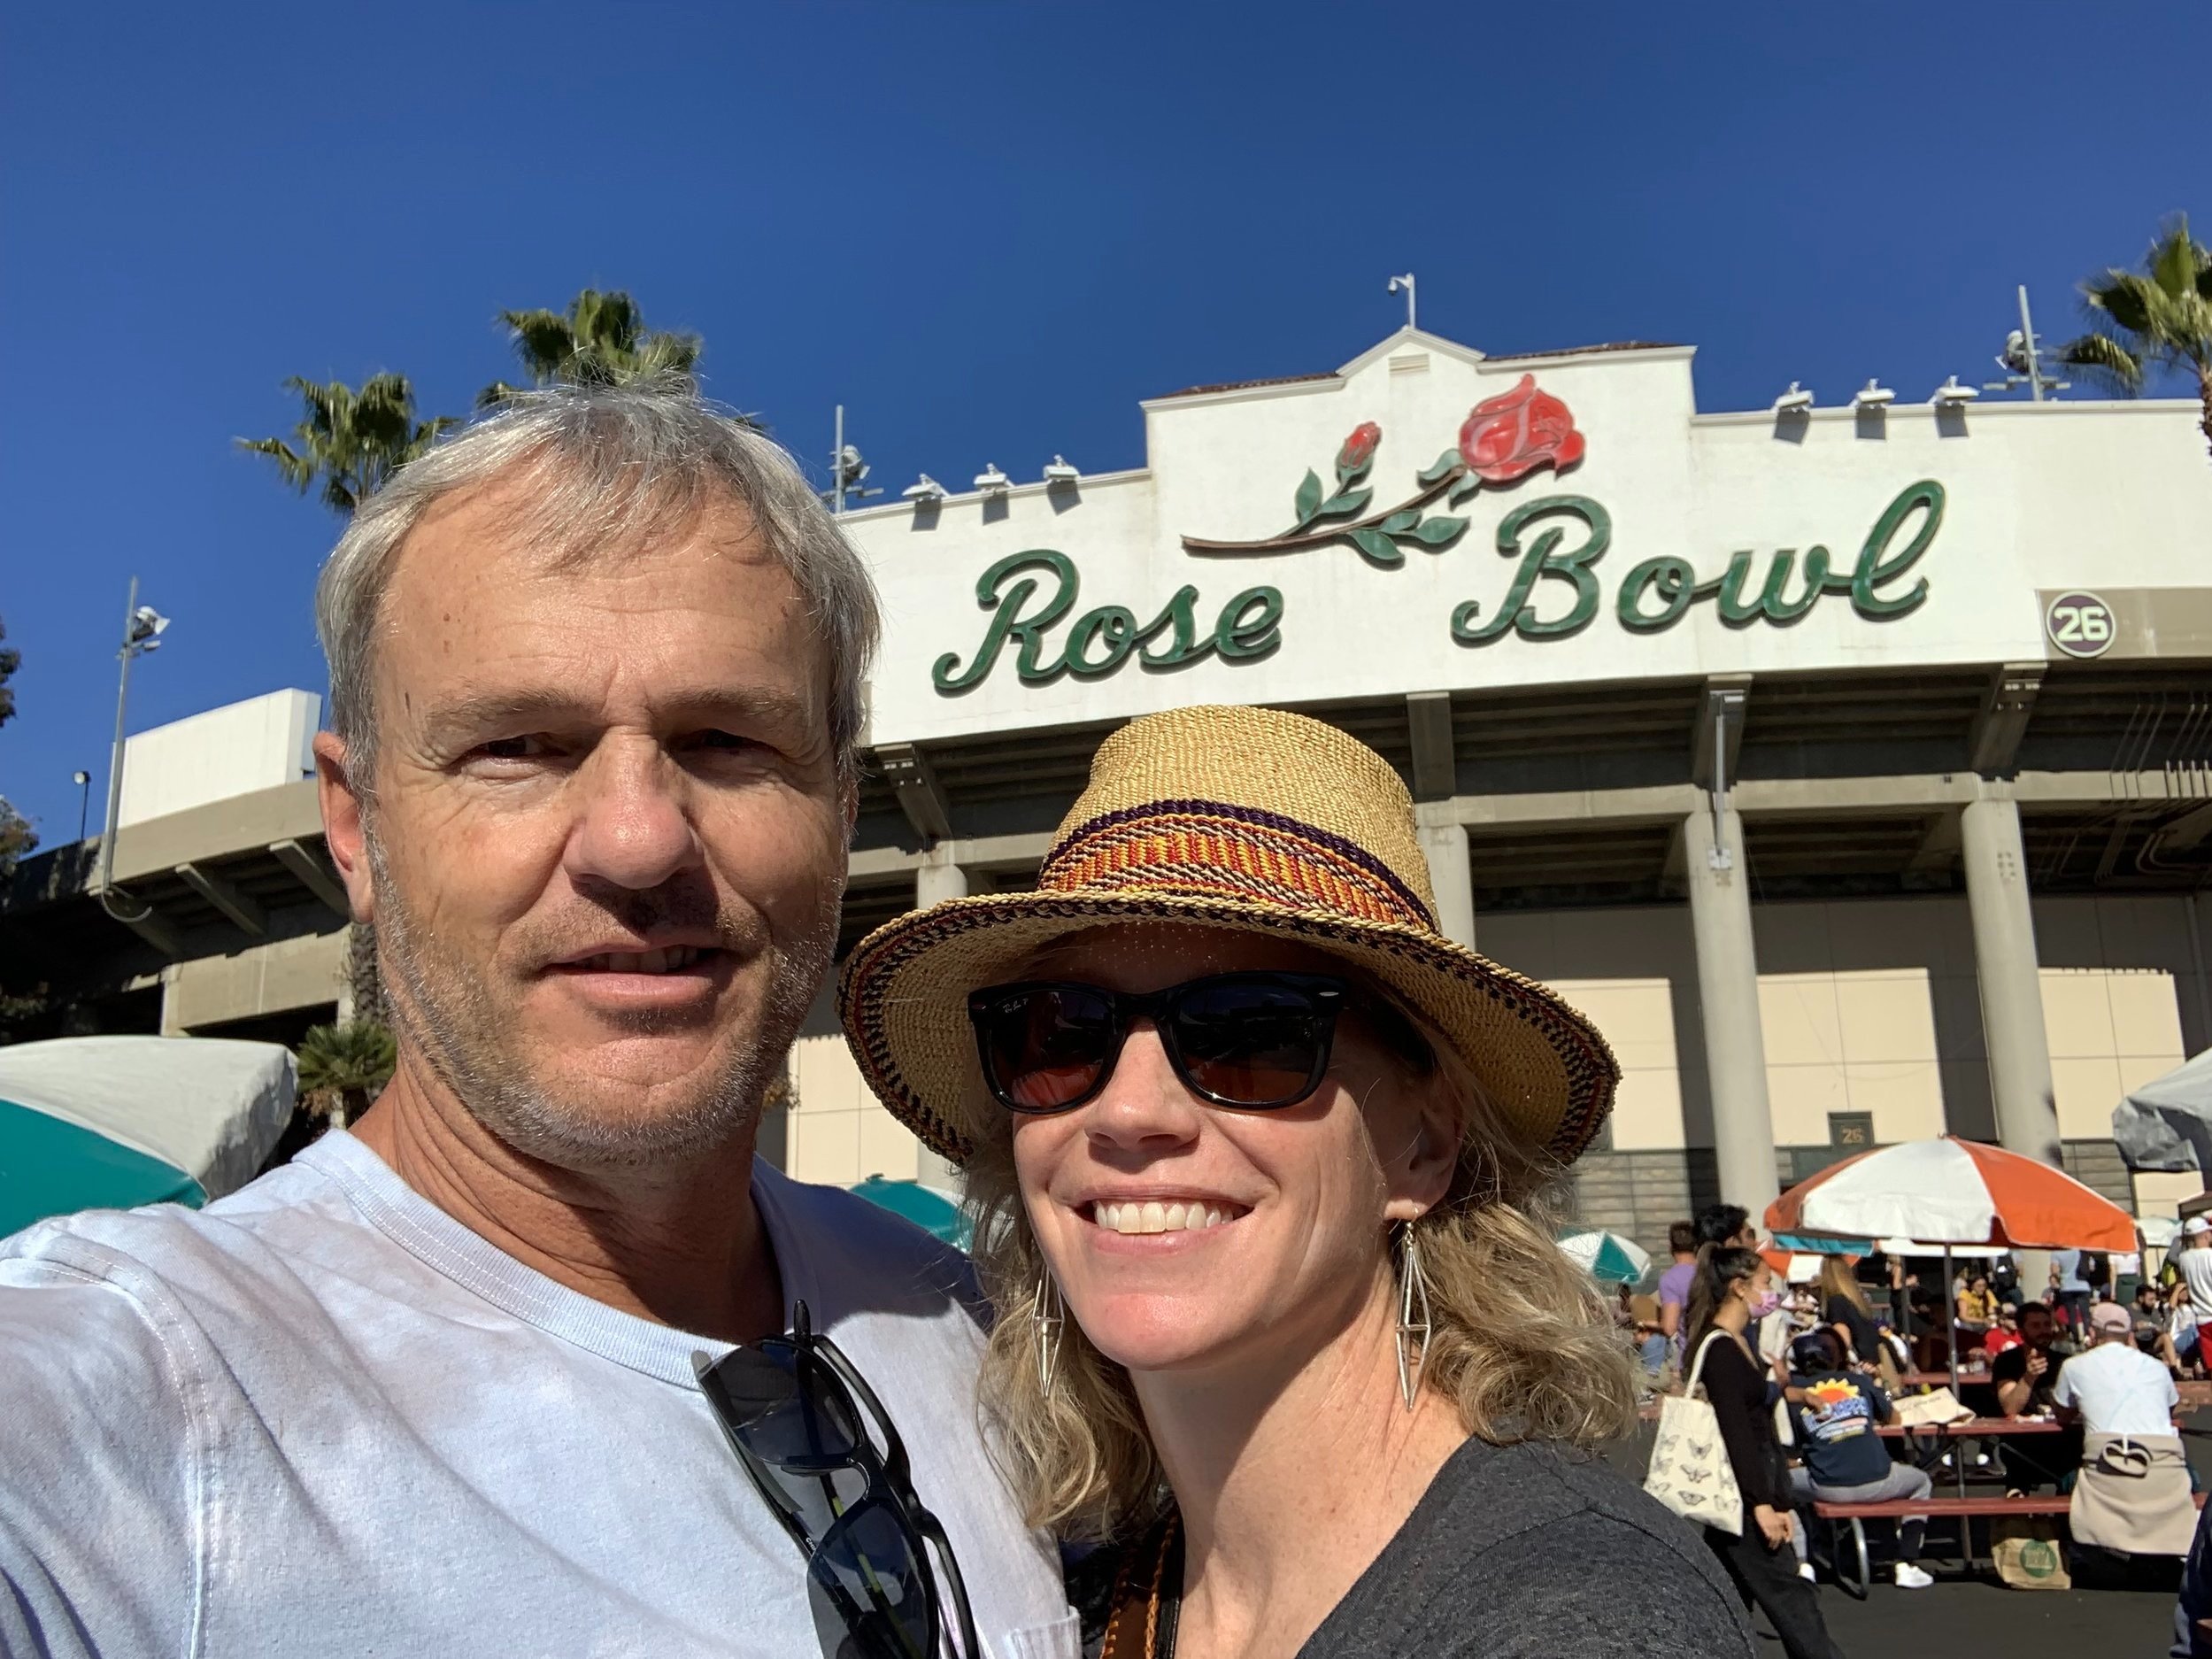 Rose Bowl Flea Market